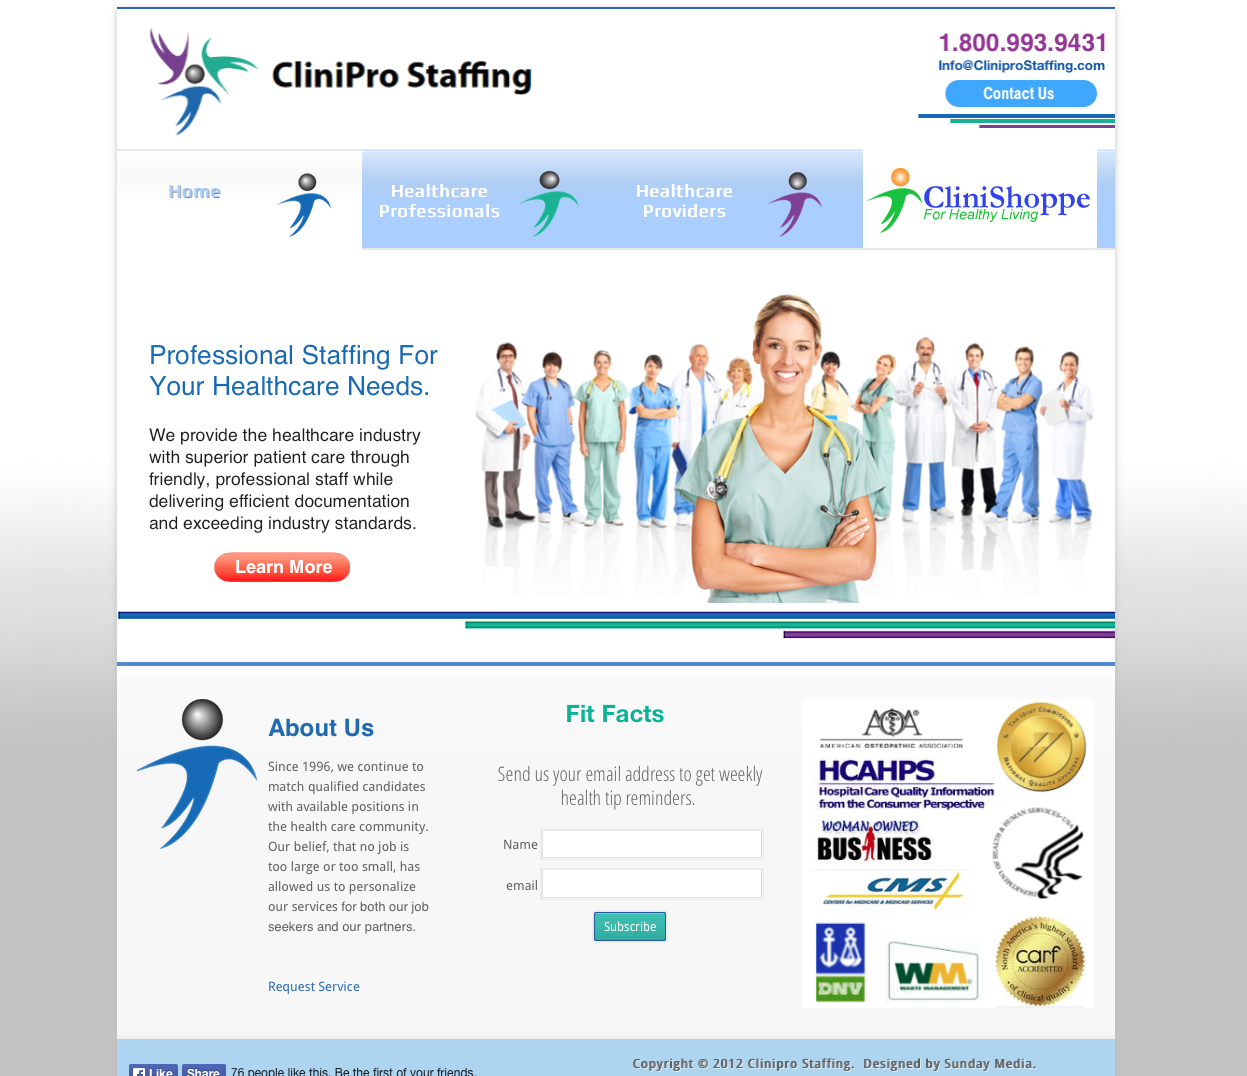 CliniPro Staffing